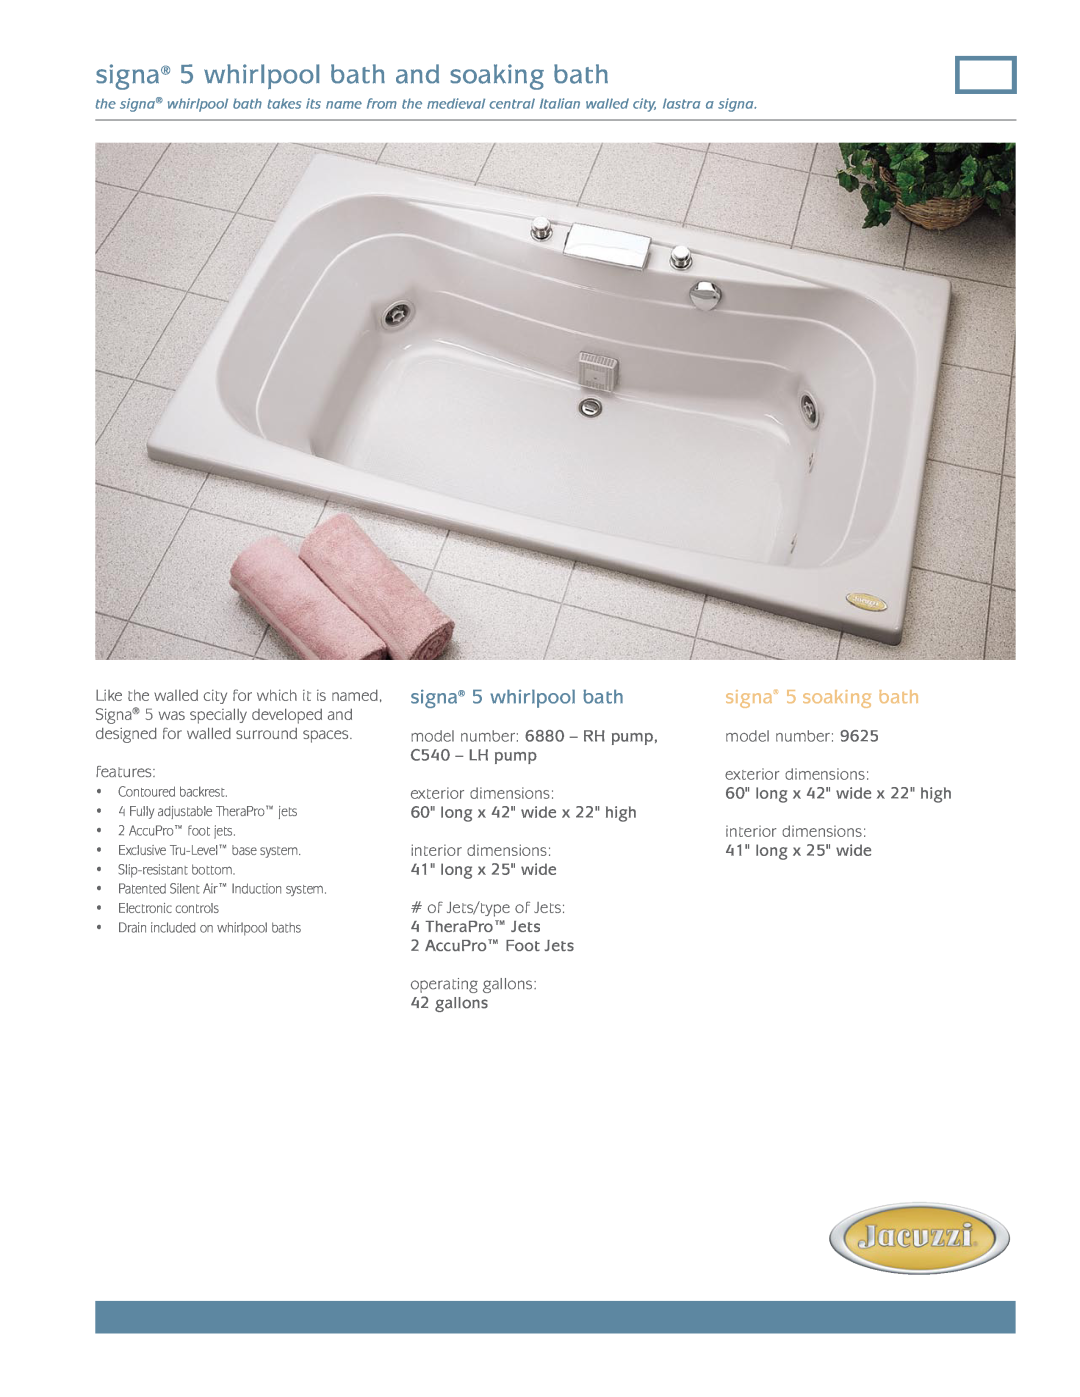 Jacuzzi 9625 dimensions signa 5 whirlpool bath and soaking bath, signa 5 soaking bath 